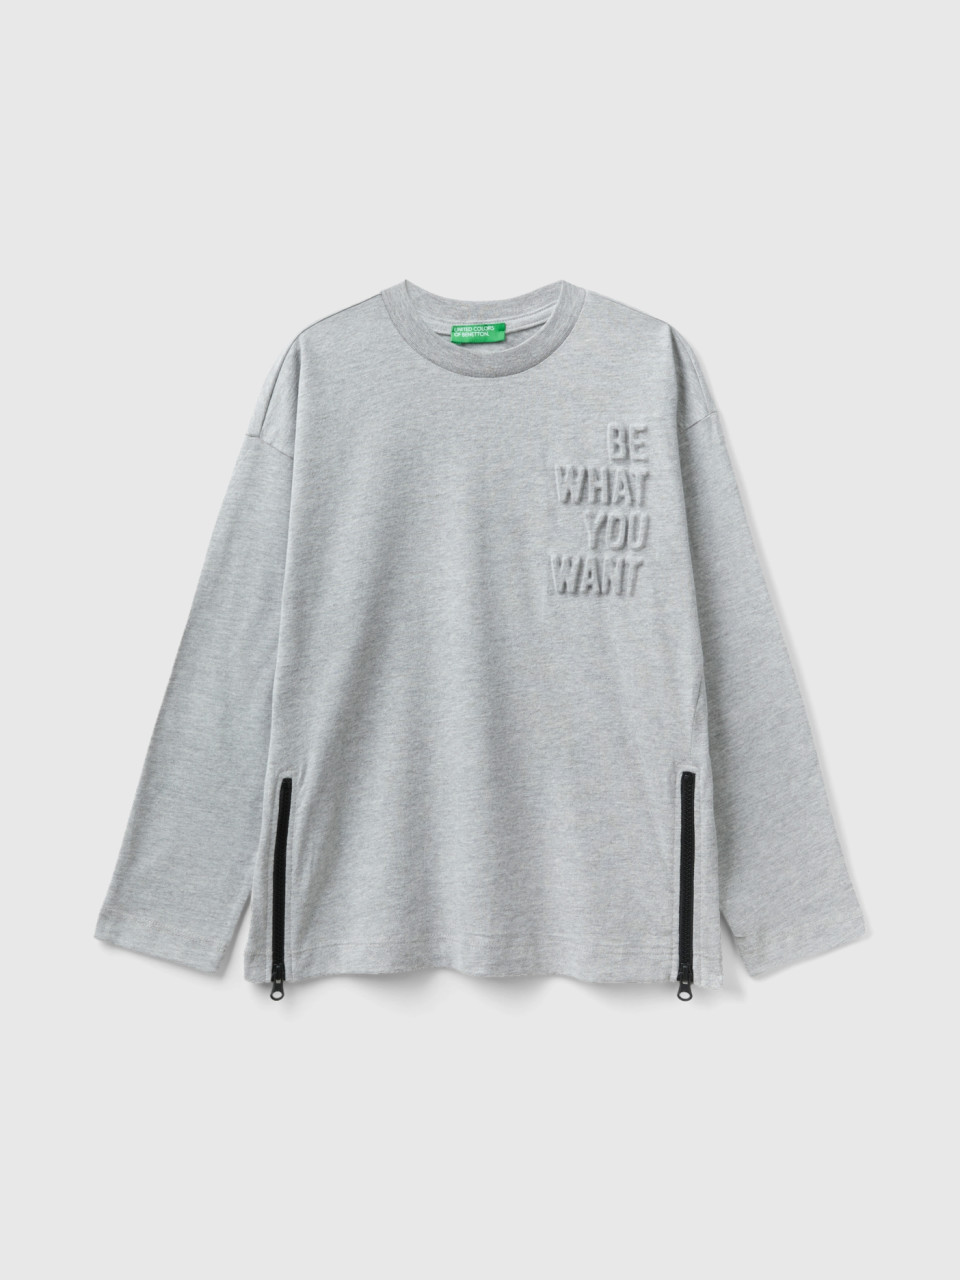 Benetton, Oversized Fit Sweatshirt With Embossed Print, Light Gray, Kids